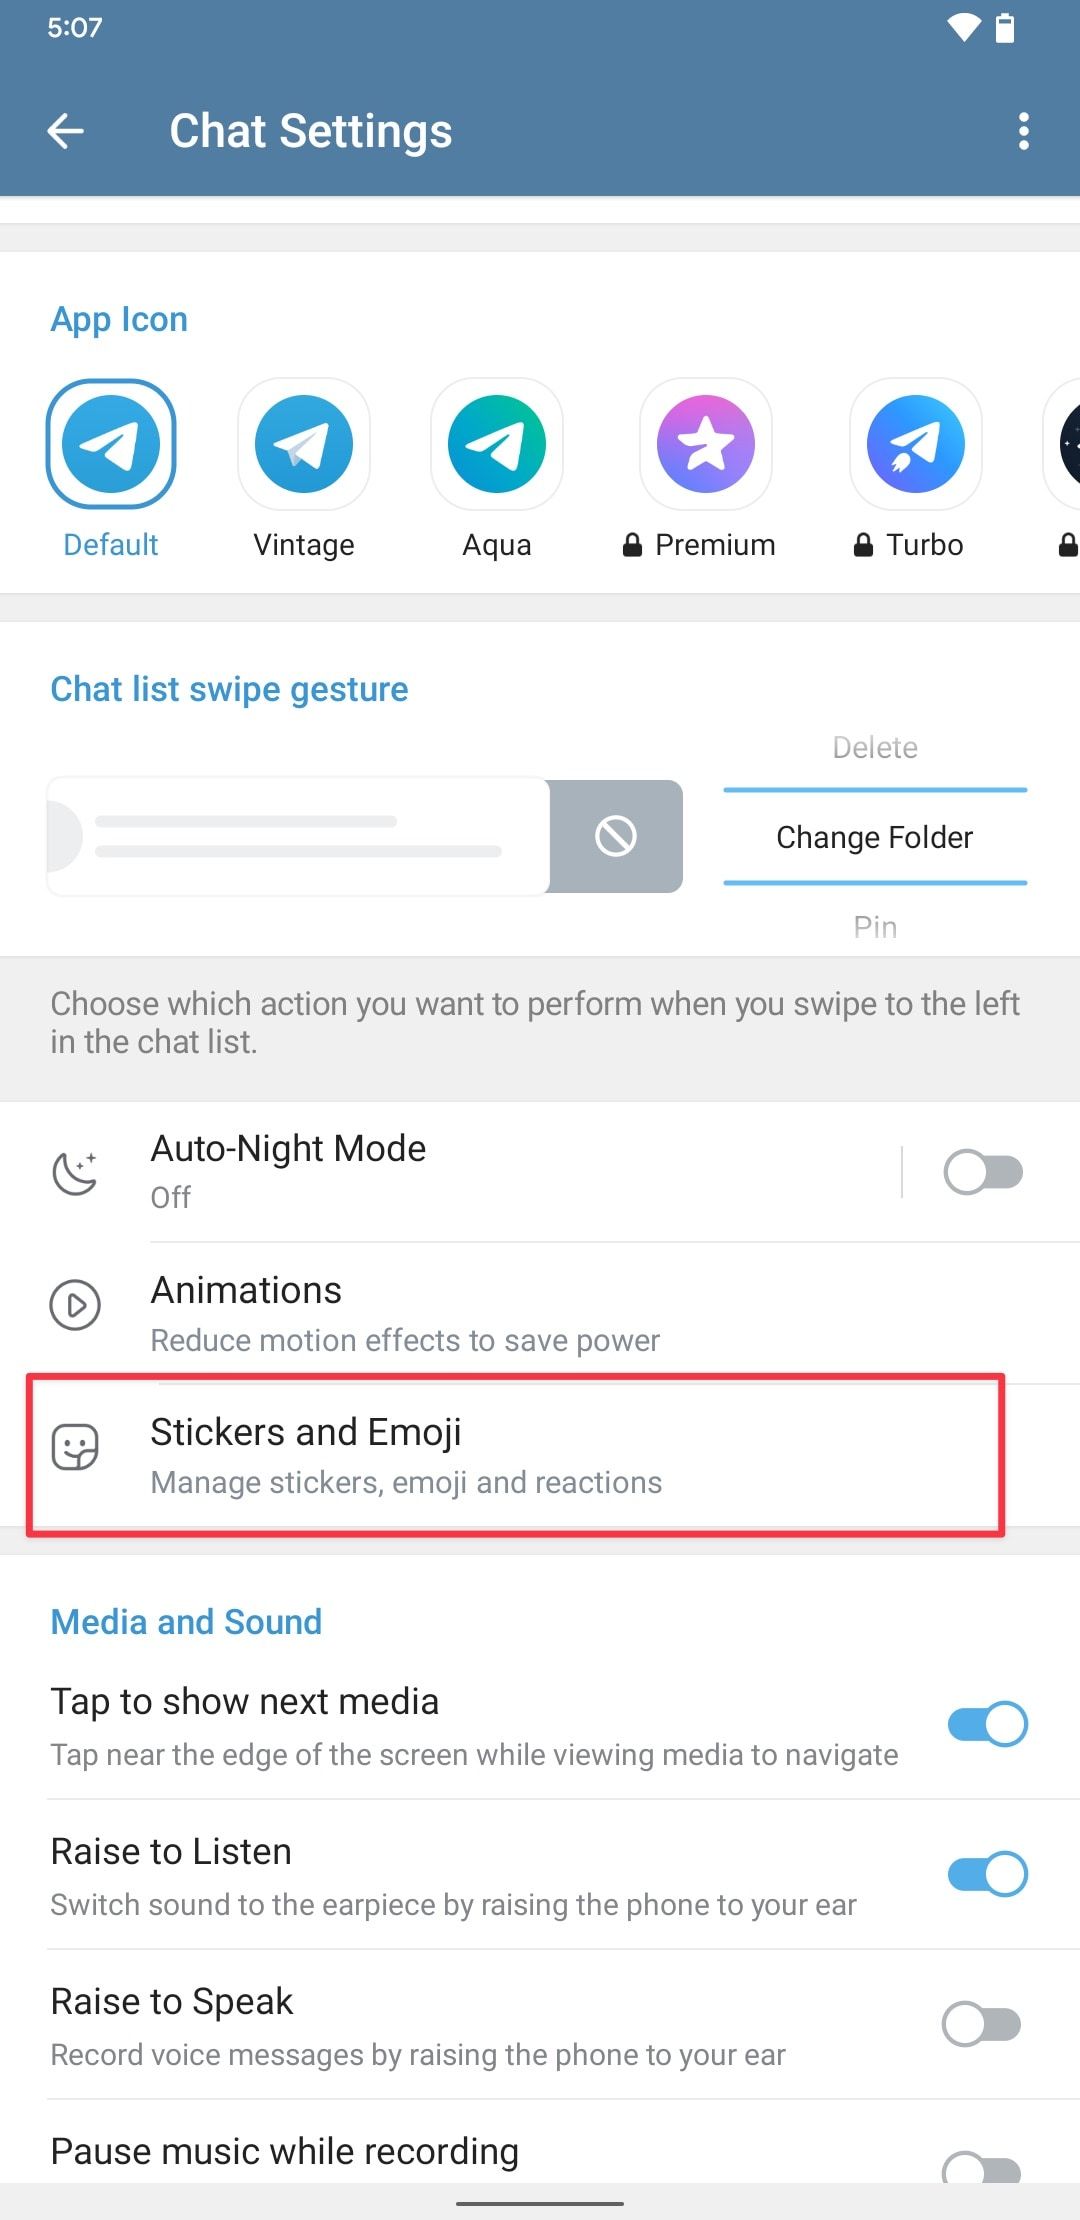 Telegram chat settings page screenshot showing Stickers and Emoji option